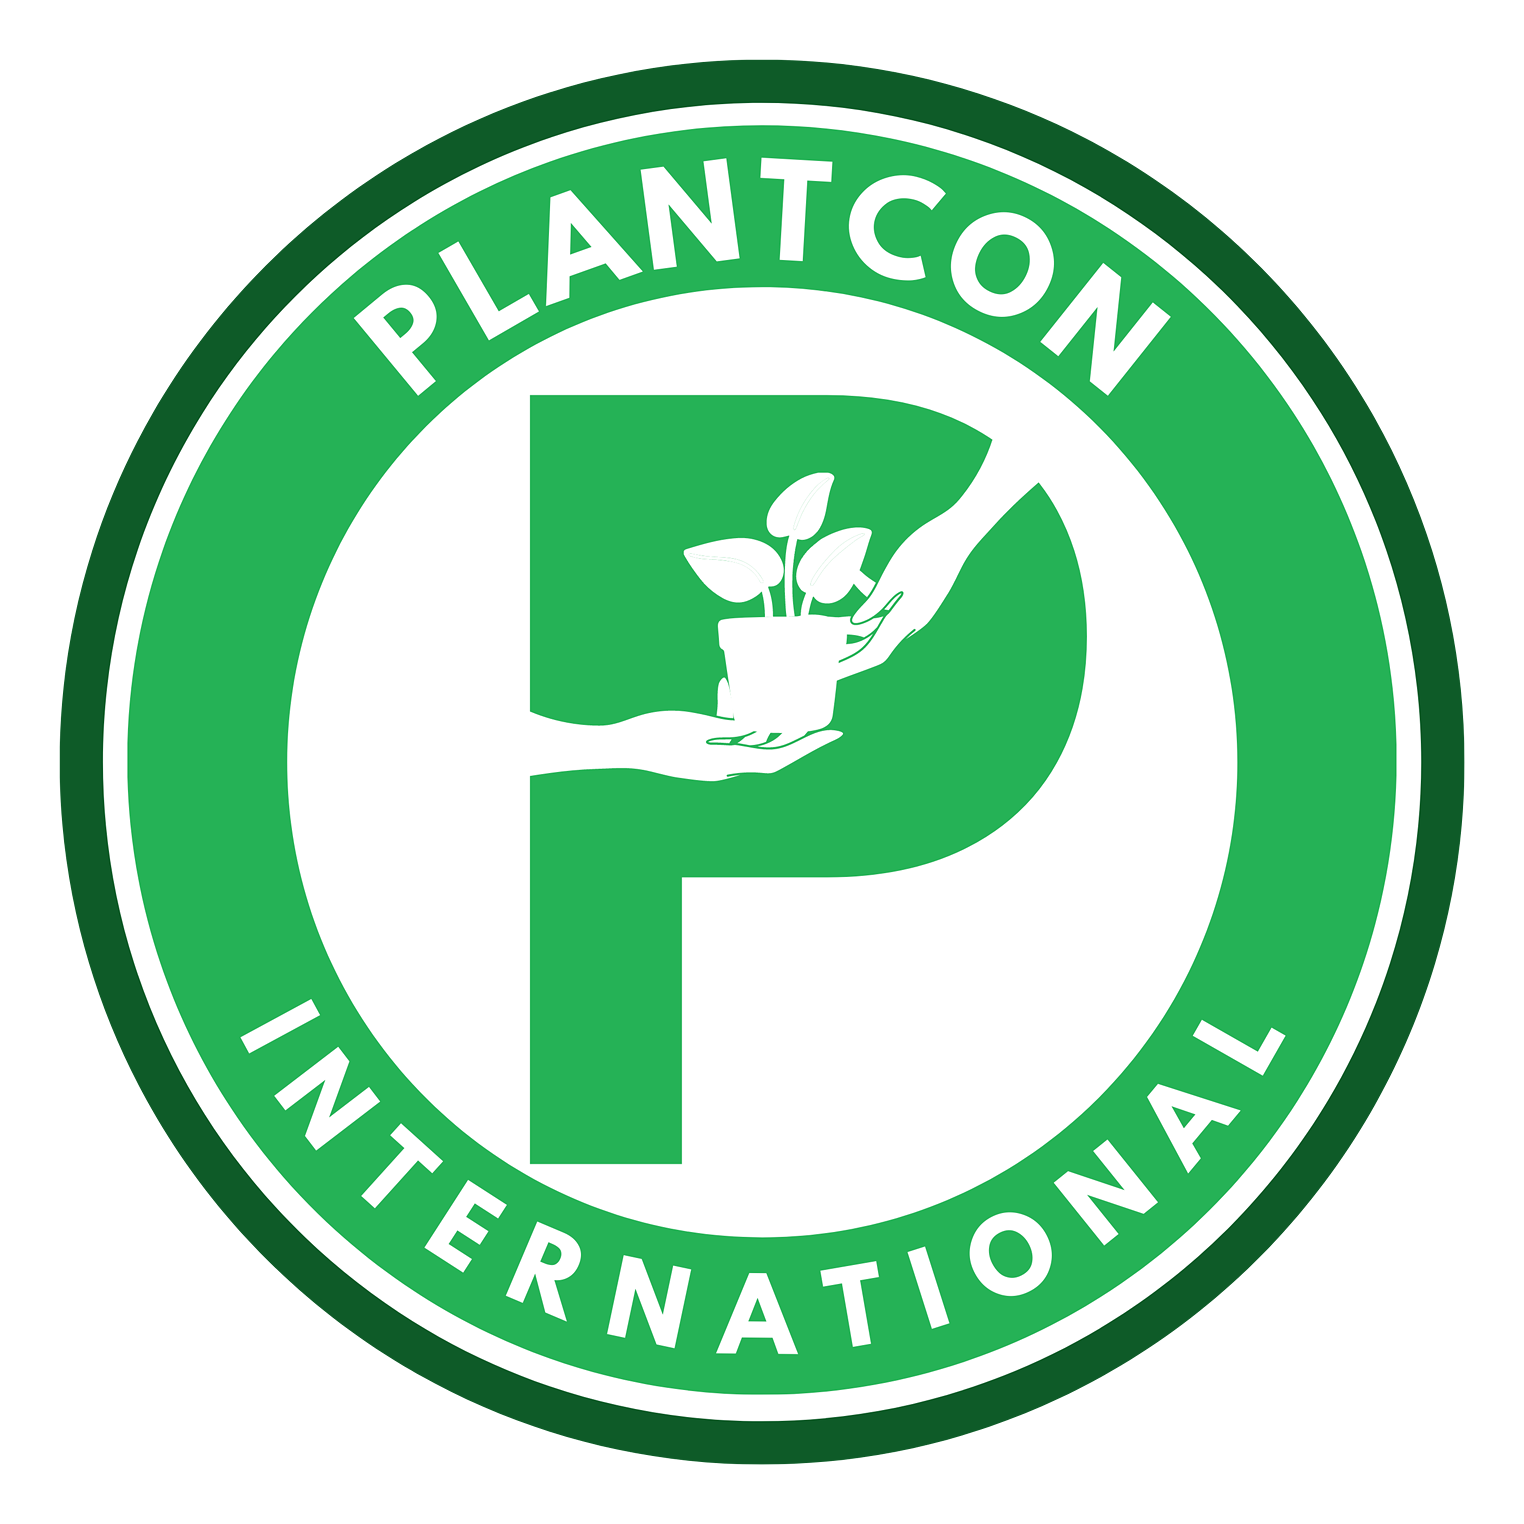 PlantCon International NRG Center Conventions Houston Press The